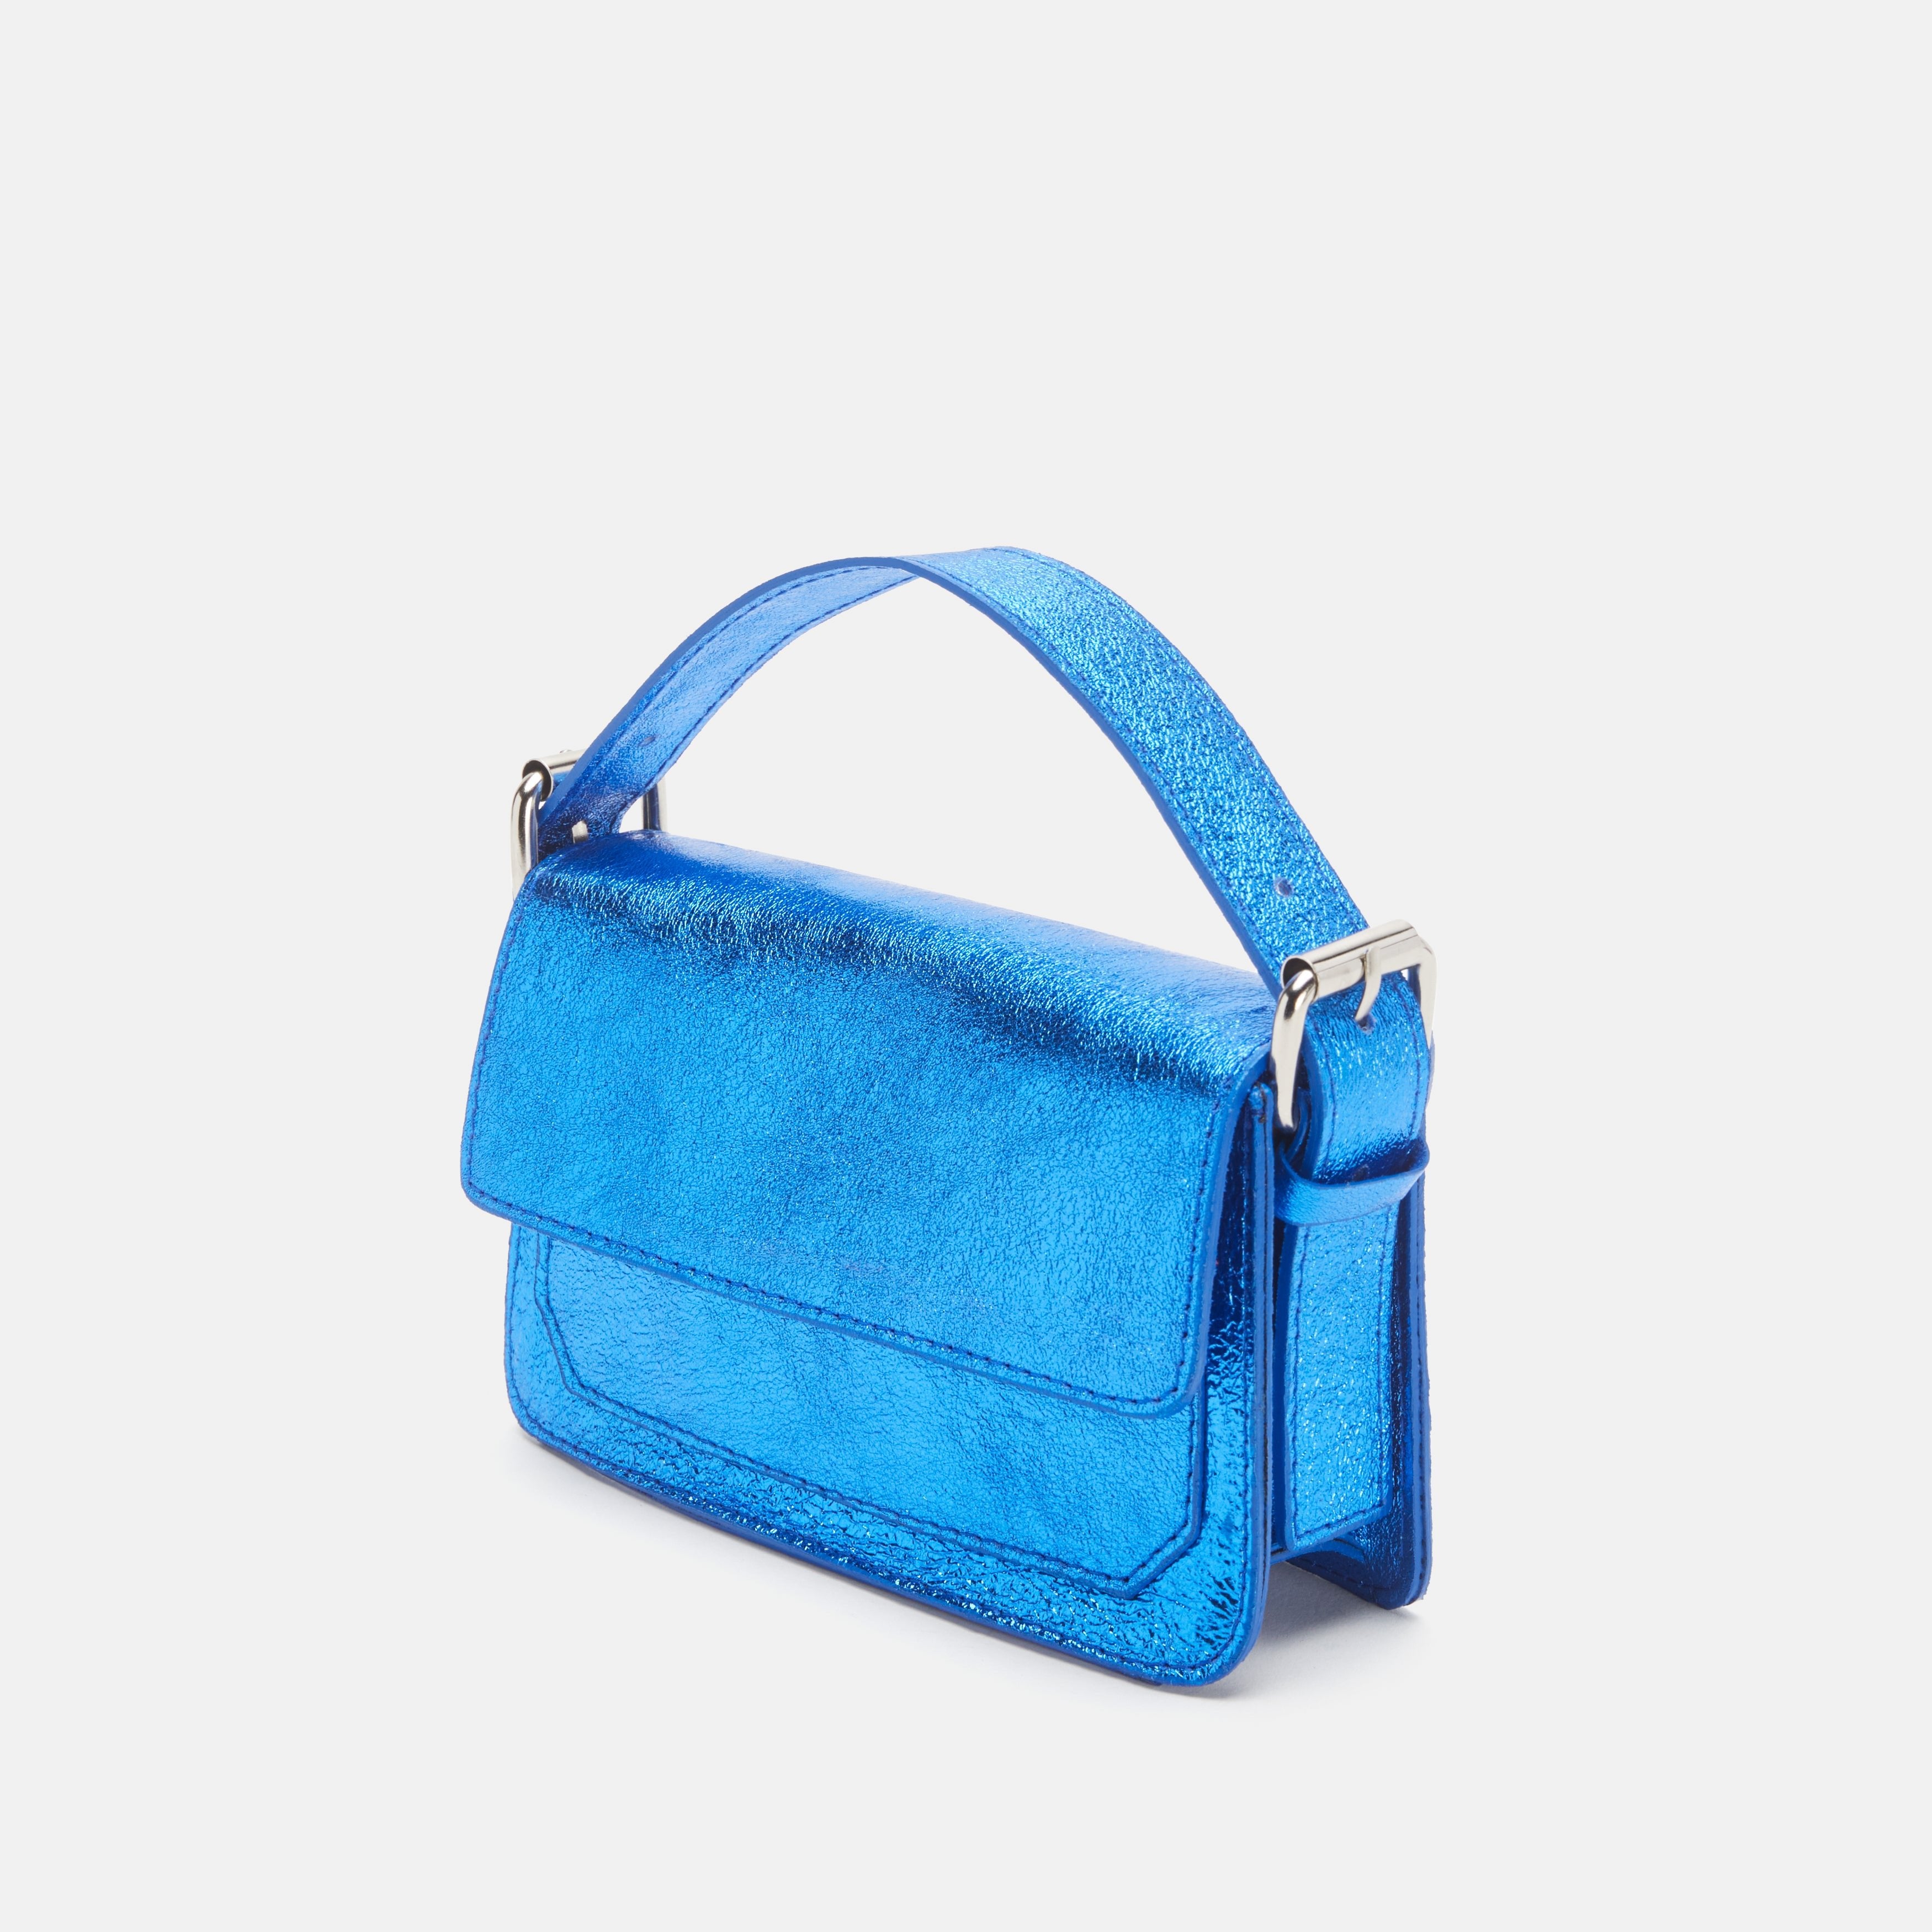 Bolso azul laminado de mano Trunk mini en piel - lolitasyl.com